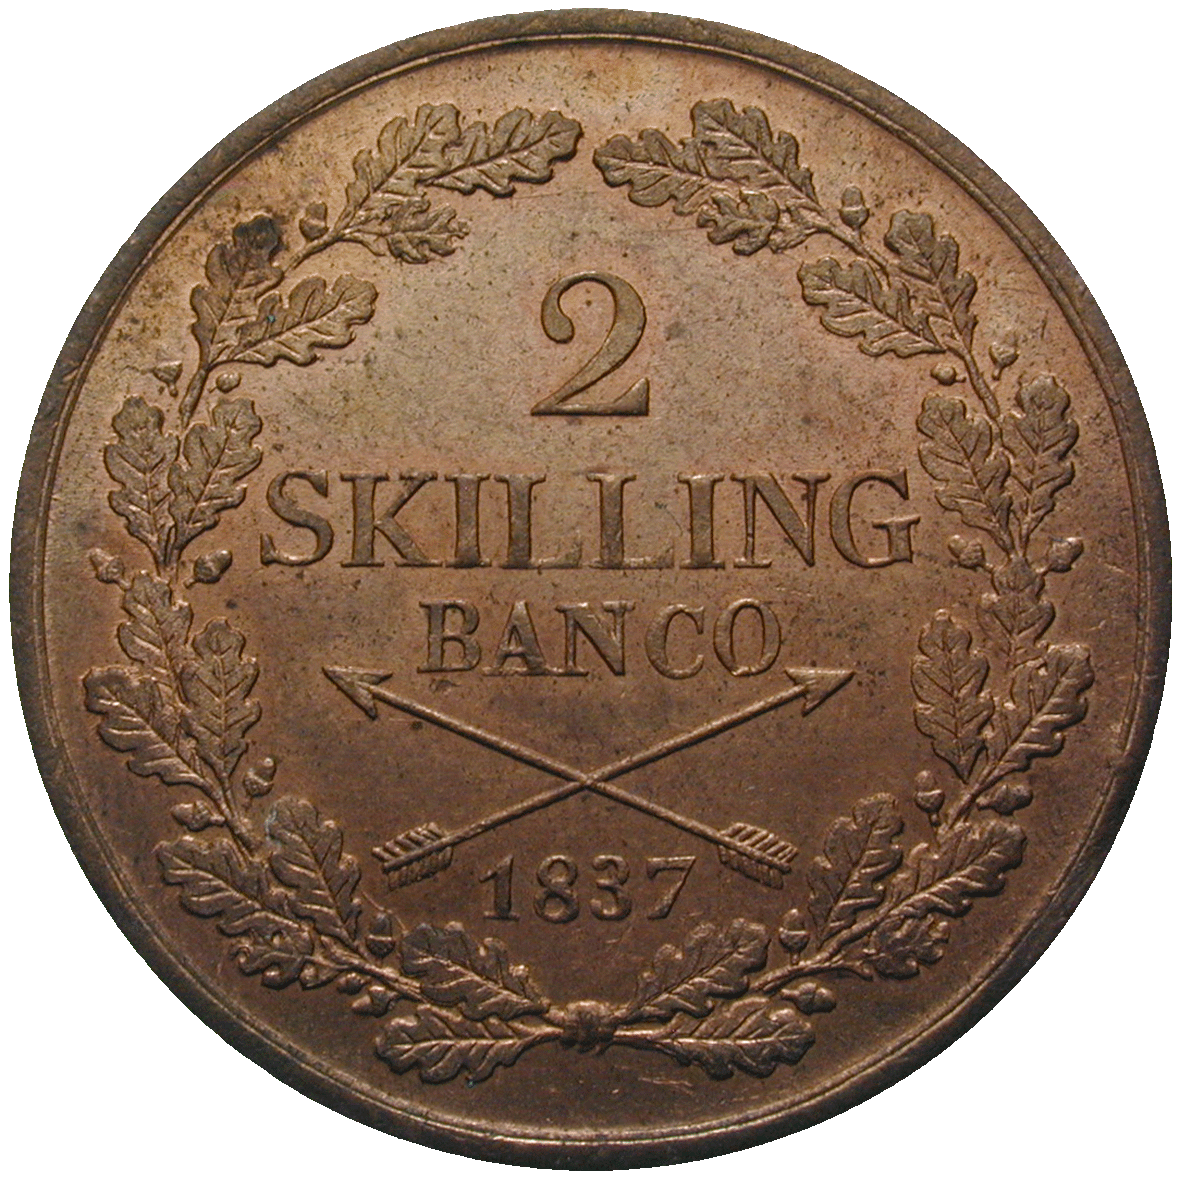 Kingdom of Sweden, Charles XIV John, 2 Skilling Banco 1837 (reverse)